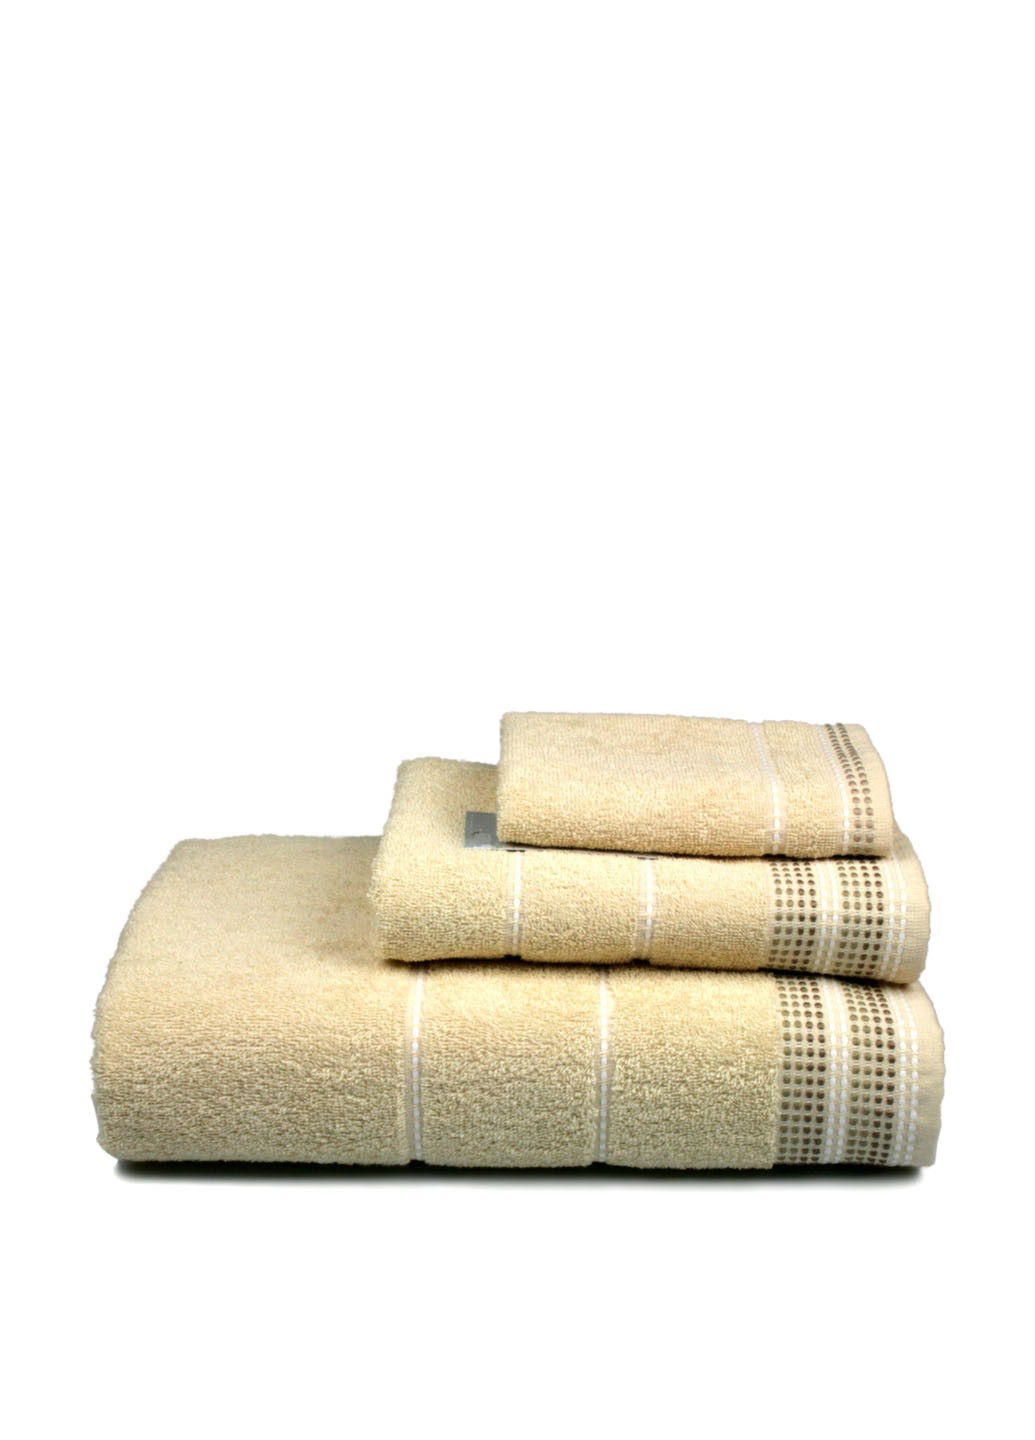 Home Line полотенце, 70х140 см геометрический кремовый производство - Турция